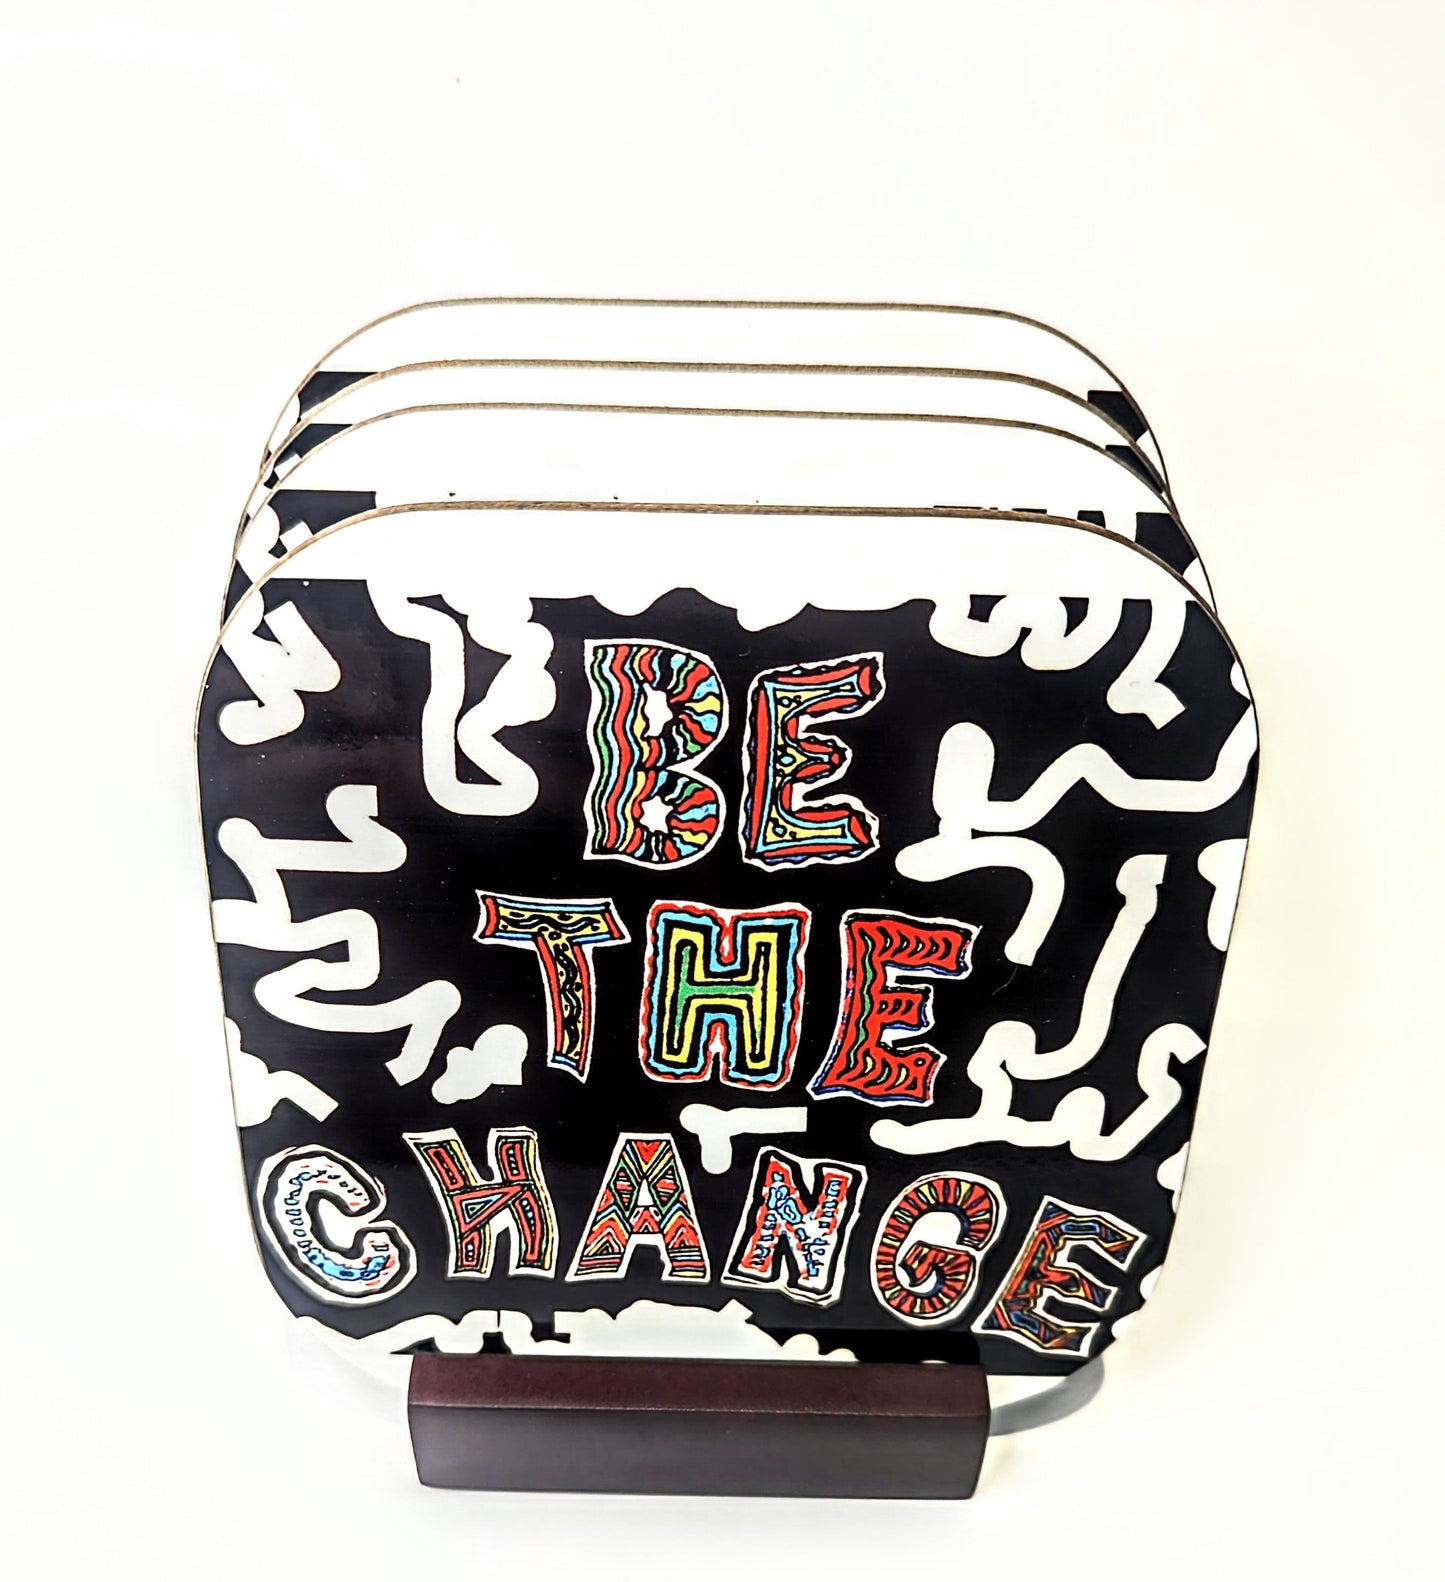 Be The Change - Tea Coaster